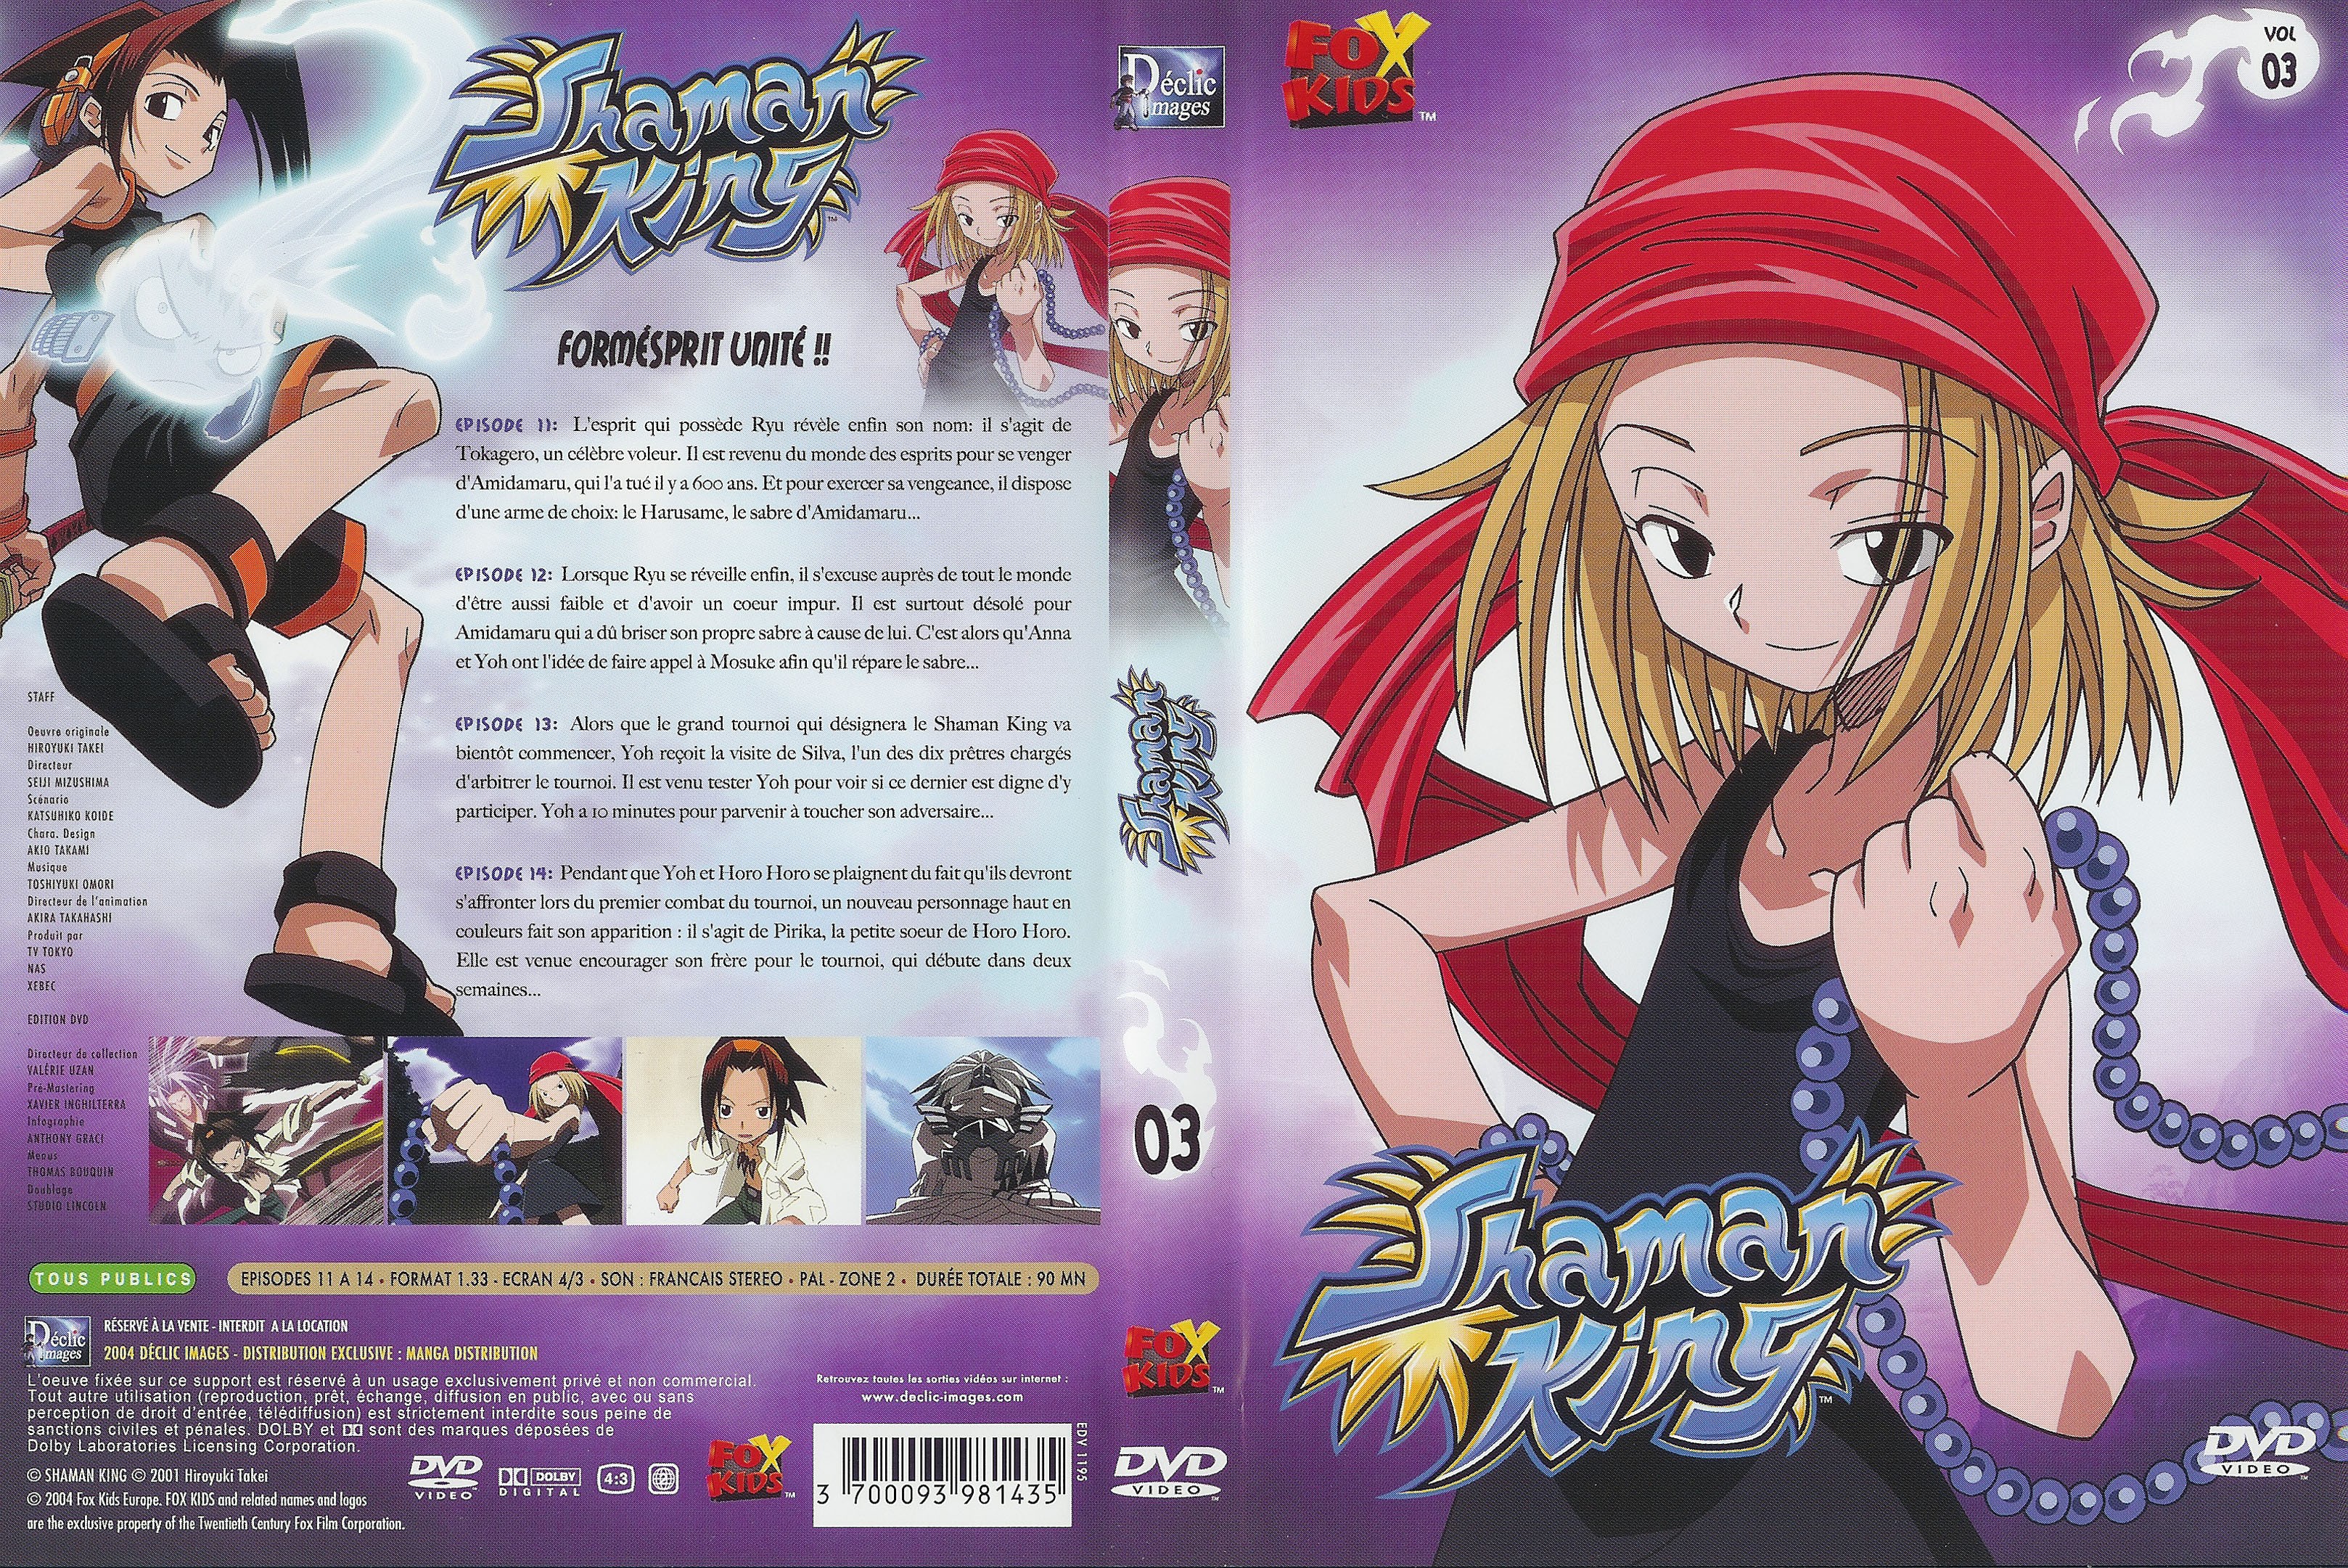 Jaquette DVD Shaman king vol 03